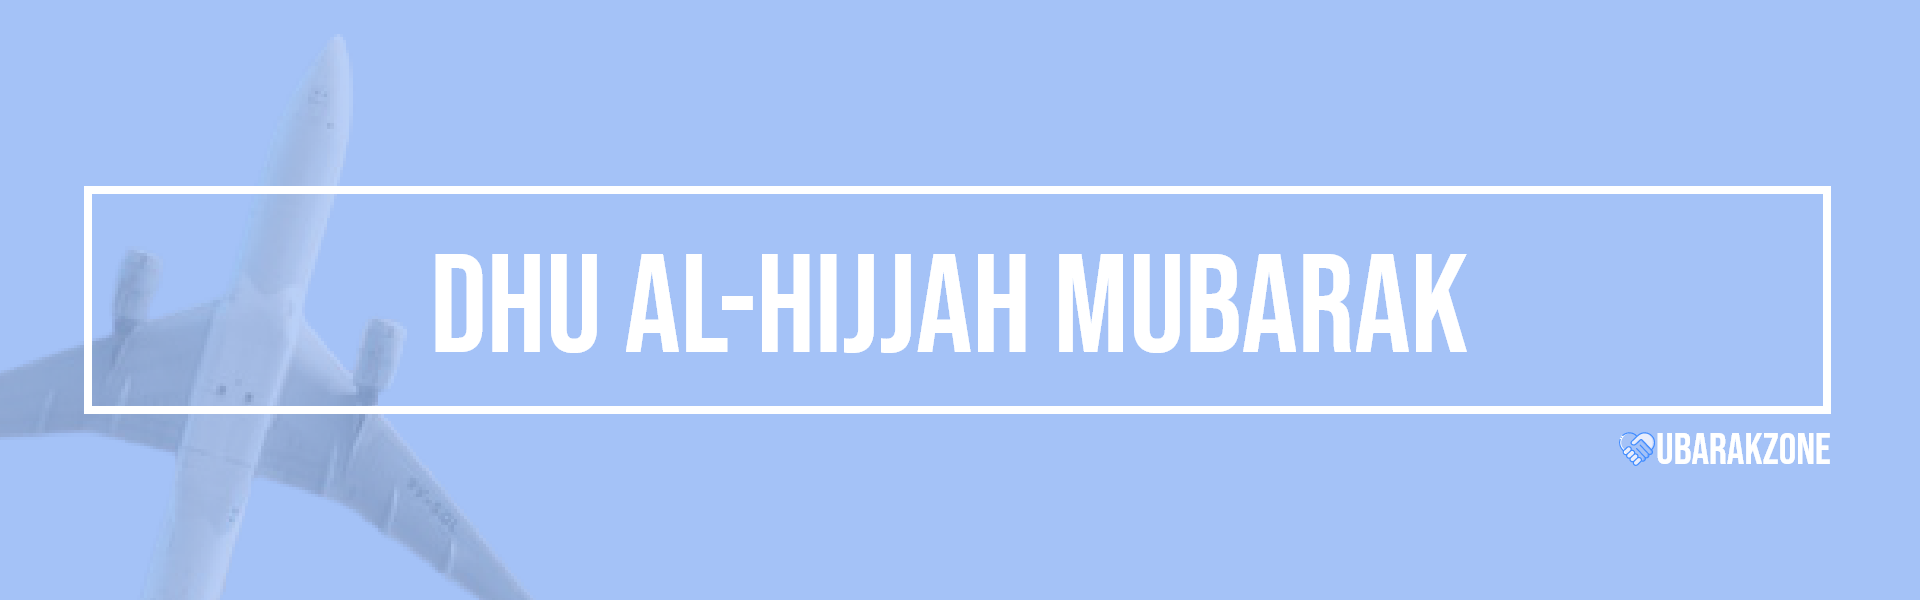 dhu al-hijjah mubarak wishes messages